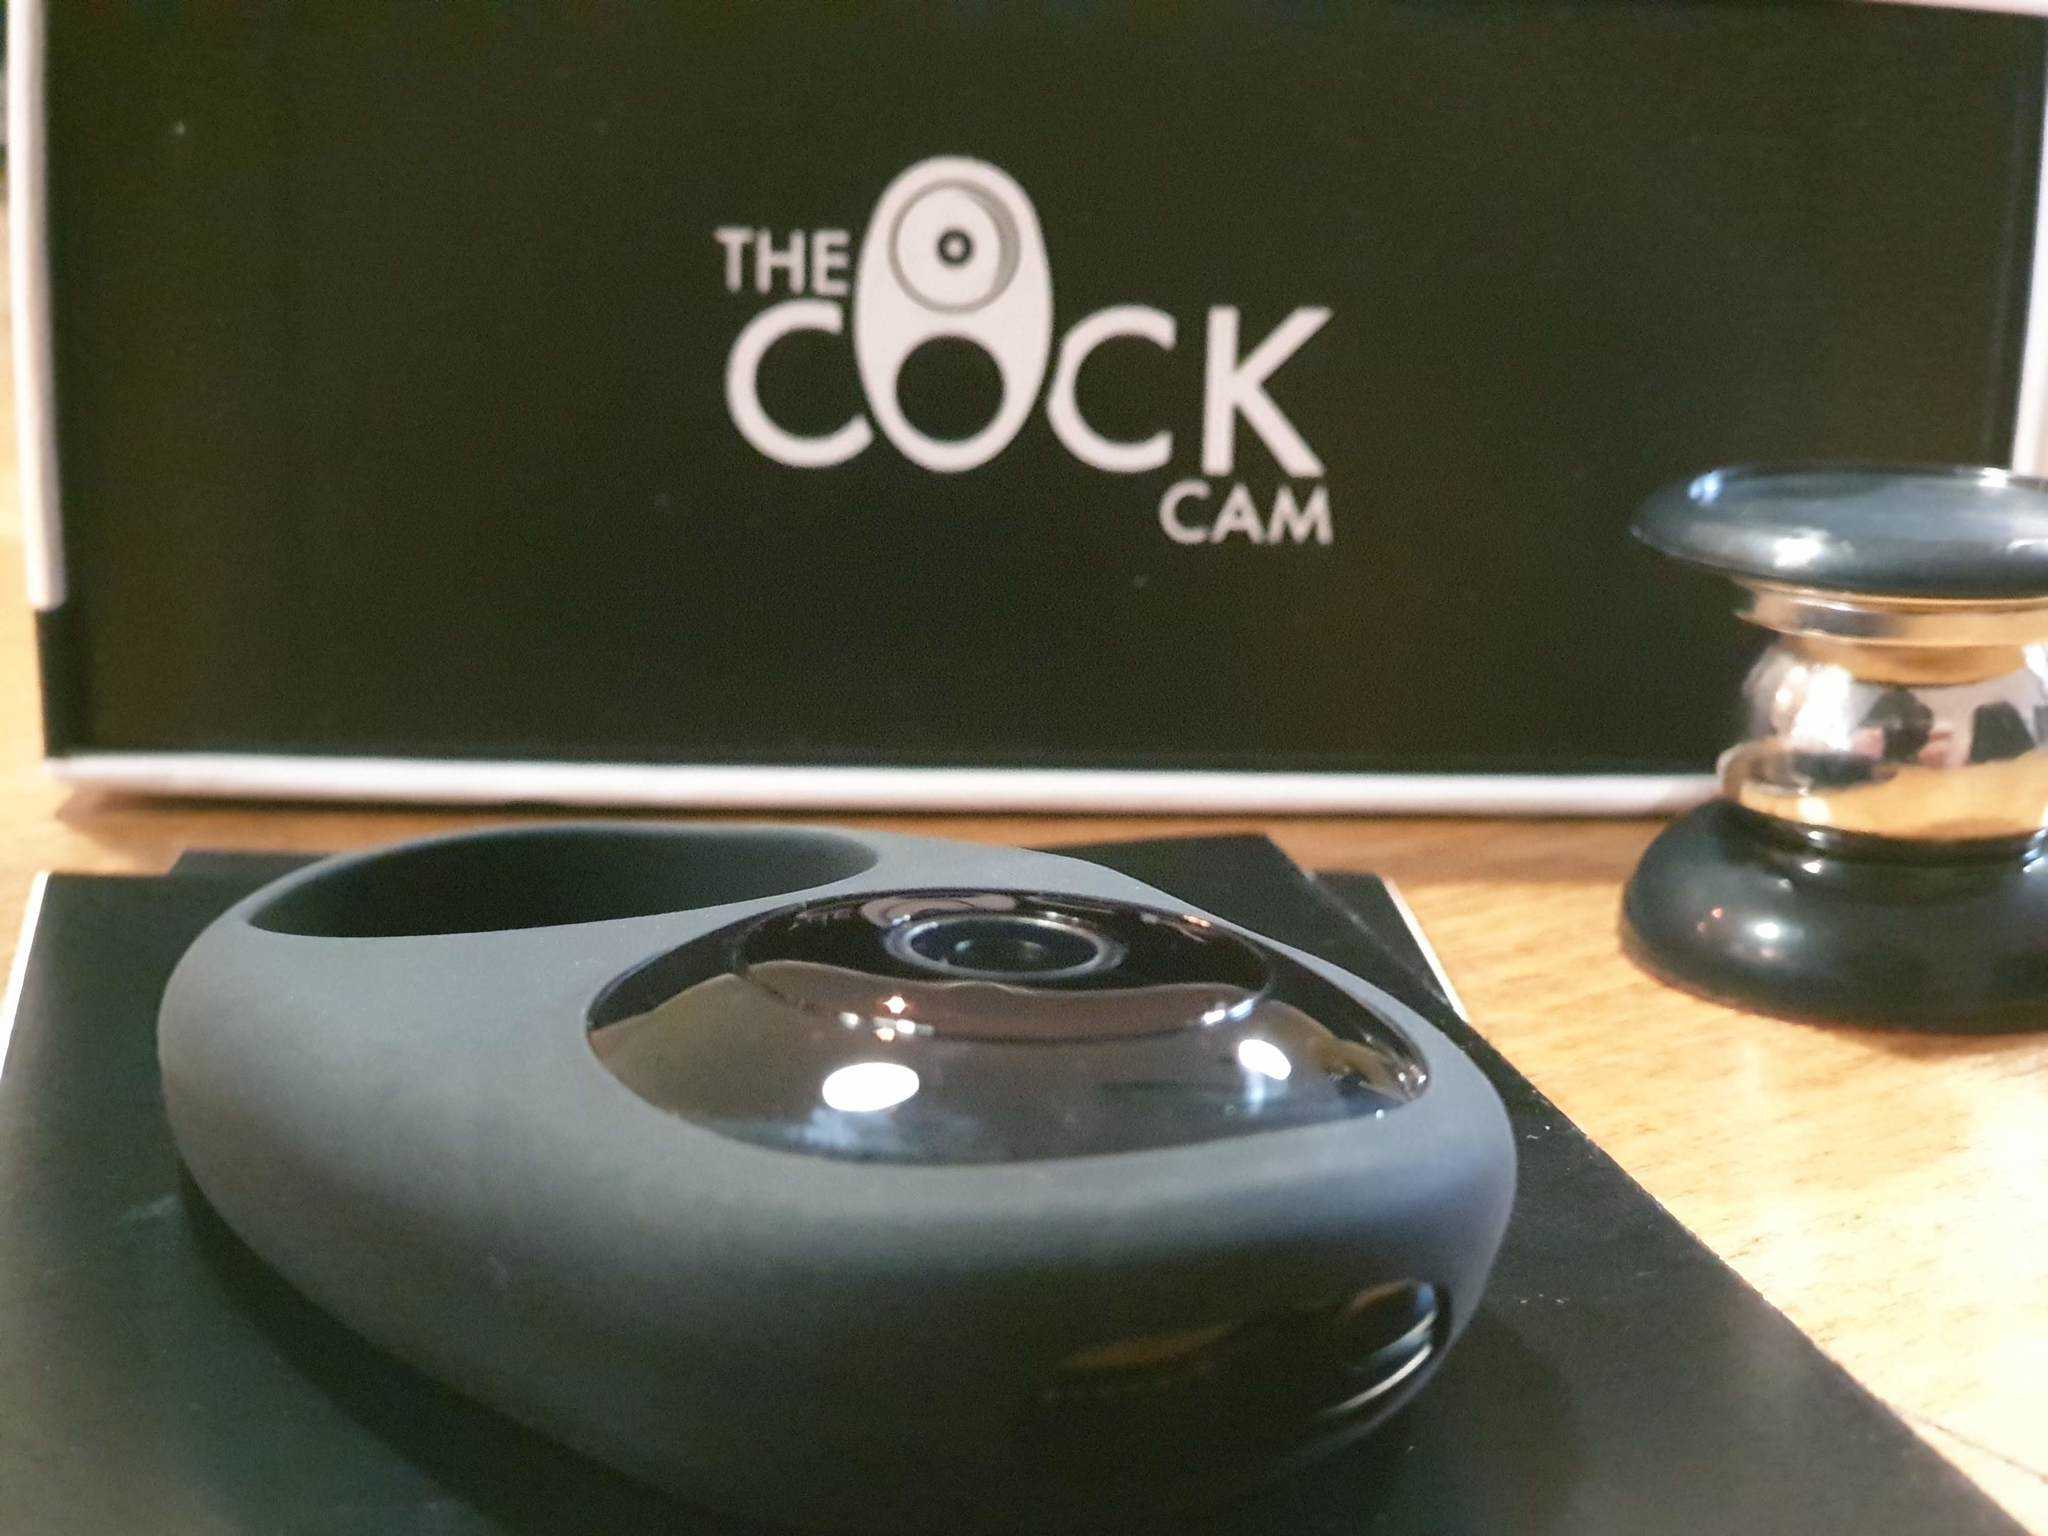 Go Pro Cam Fuck - Cock Cam Review: Fun Night Vision Mode and Discreet Design